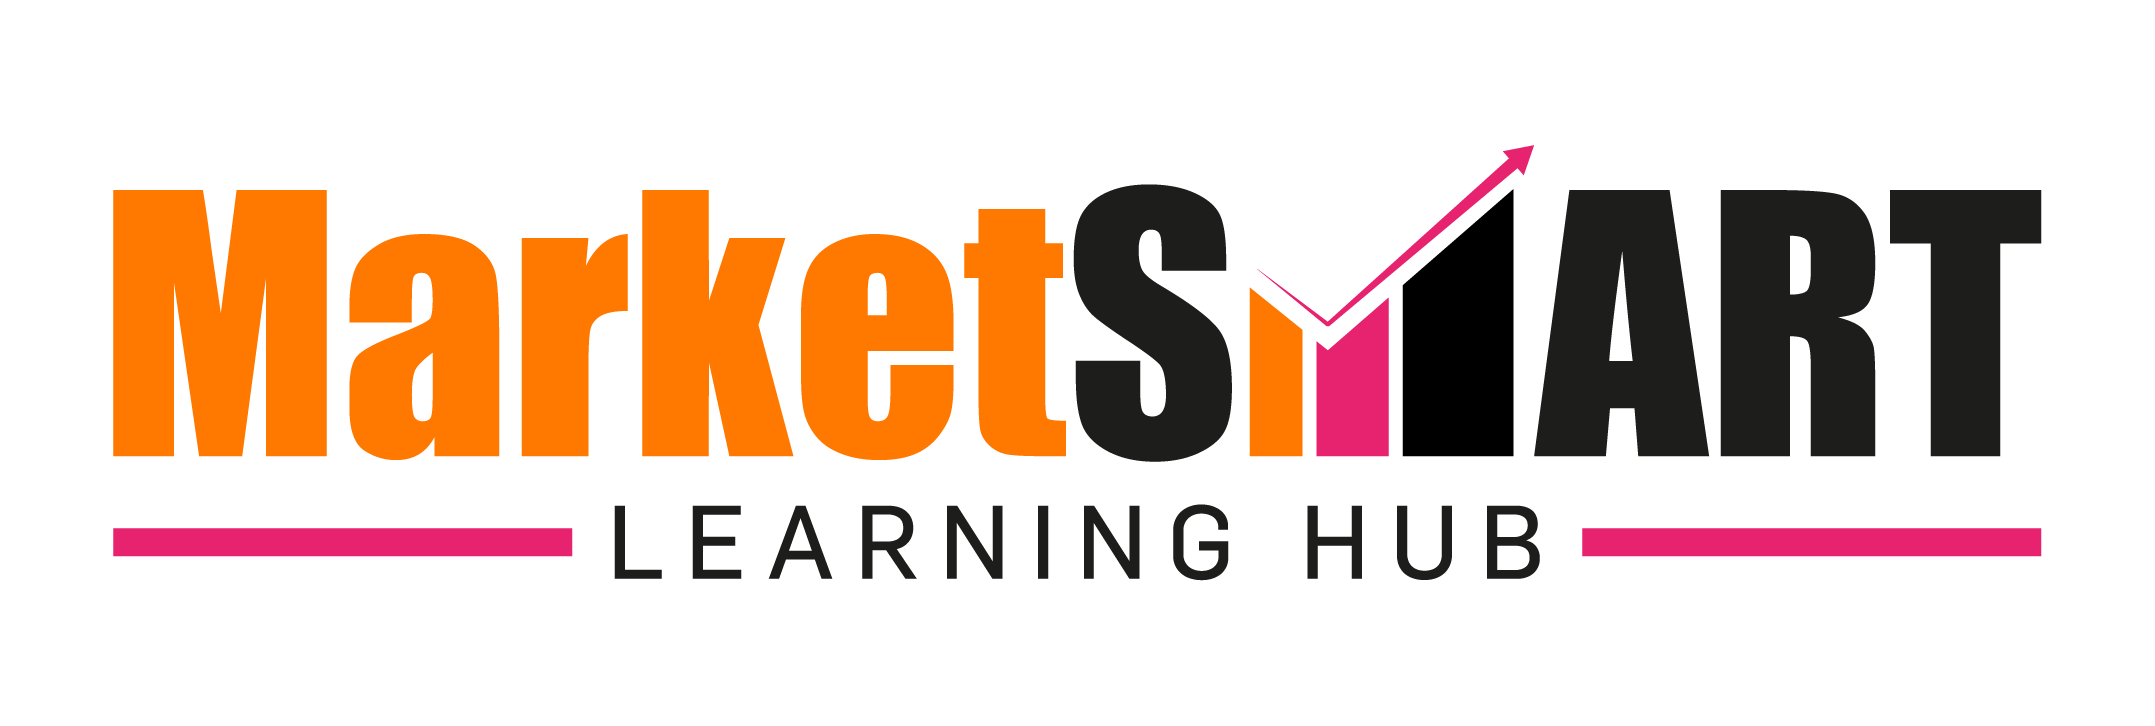 MarketSMART Learning Hub logo